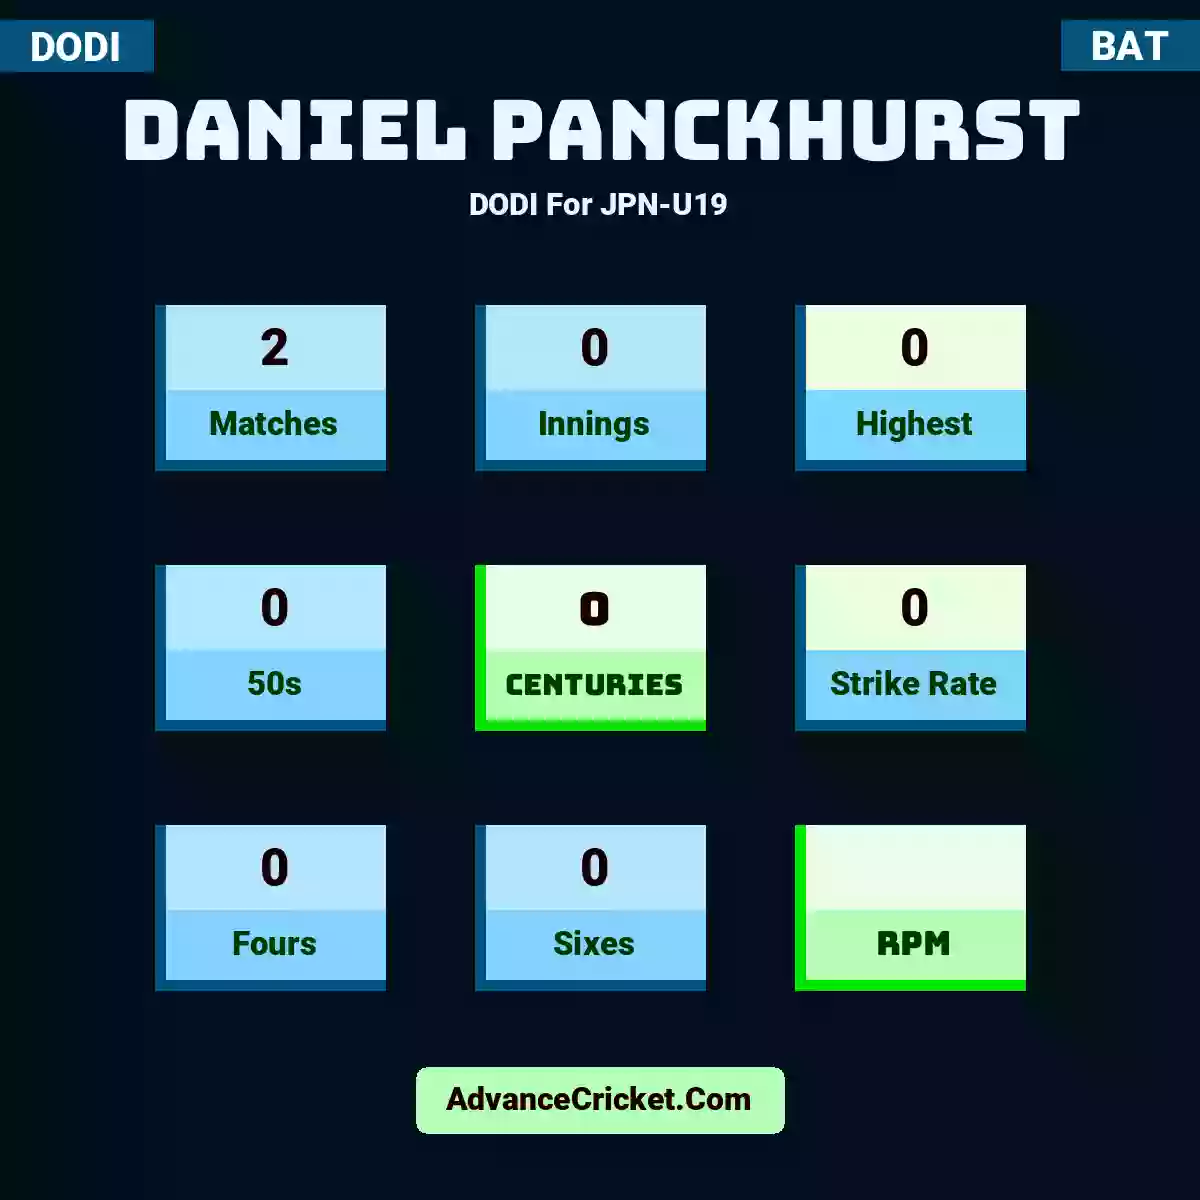 Daniel Panckhurst DODI  For JPN-U19, Daniel Panckhurst played 2 matches, scored 0 runs as highest, 0 half-centuries, and 0 centuries, with a strike rate of 0. D.Panckhurst hit 0 fours and 0 sixes.